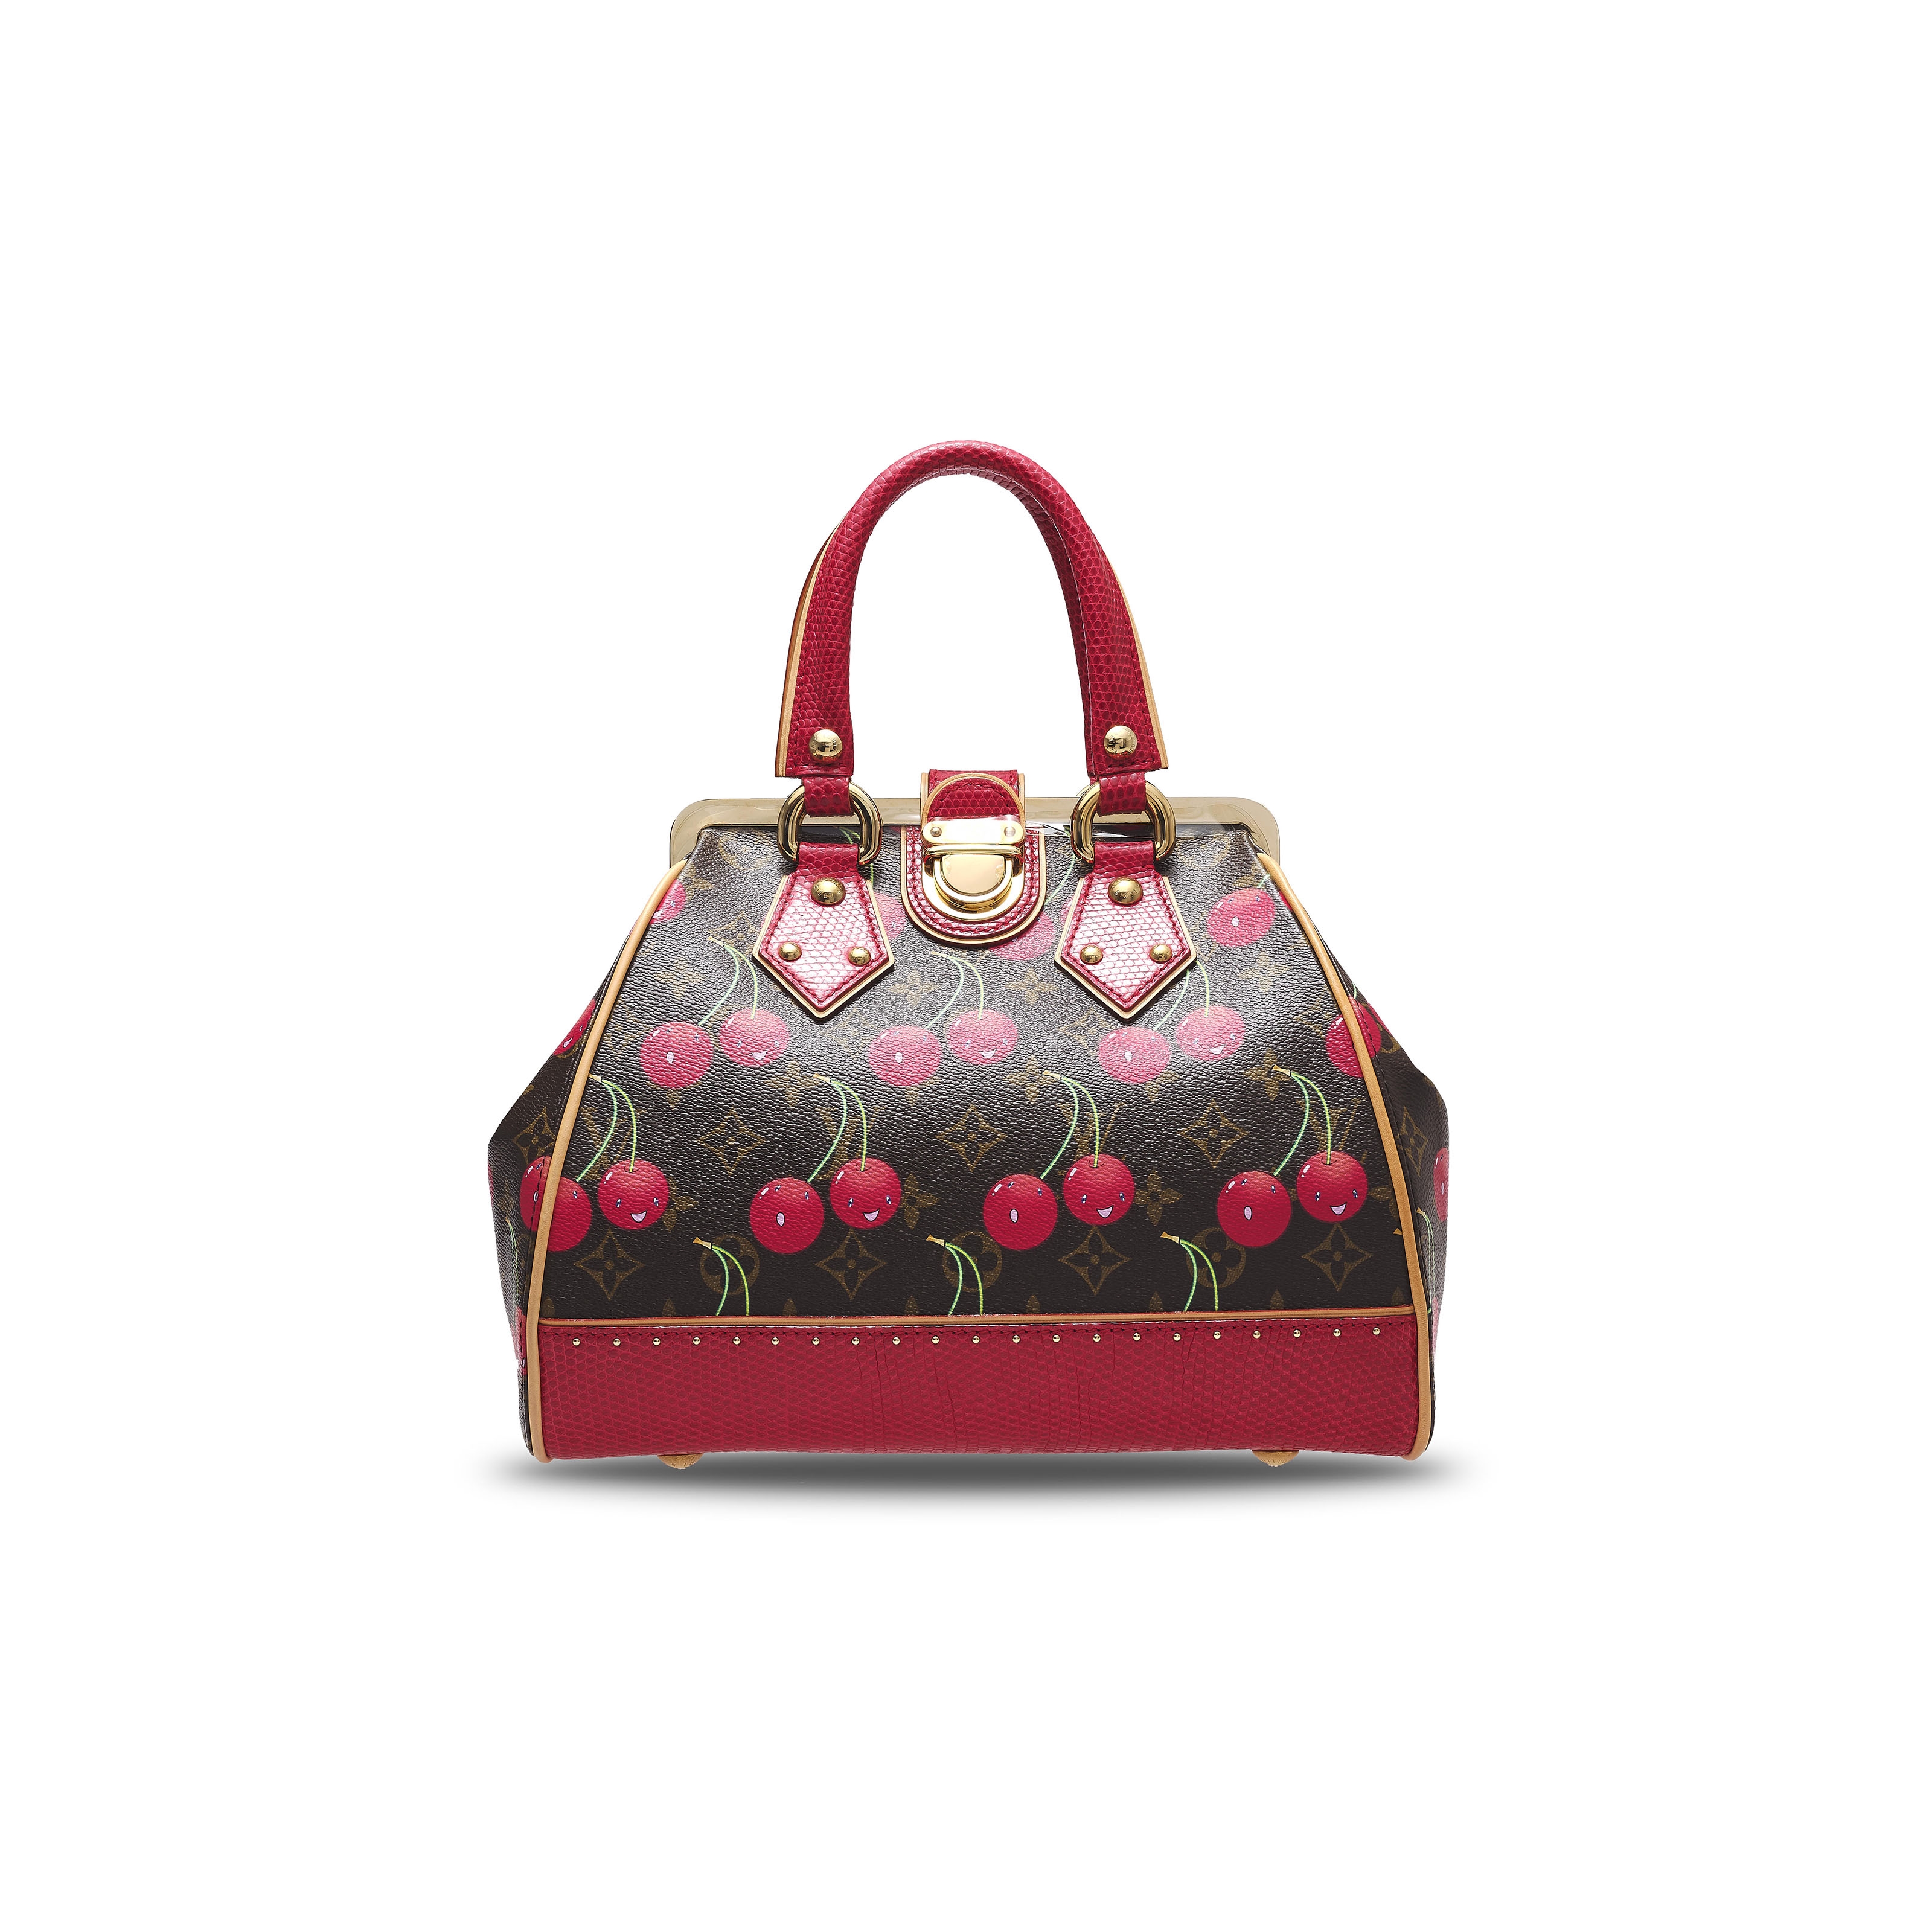 Sold at Auction: Louis Vuitton bag Cherry Blossom Murakami